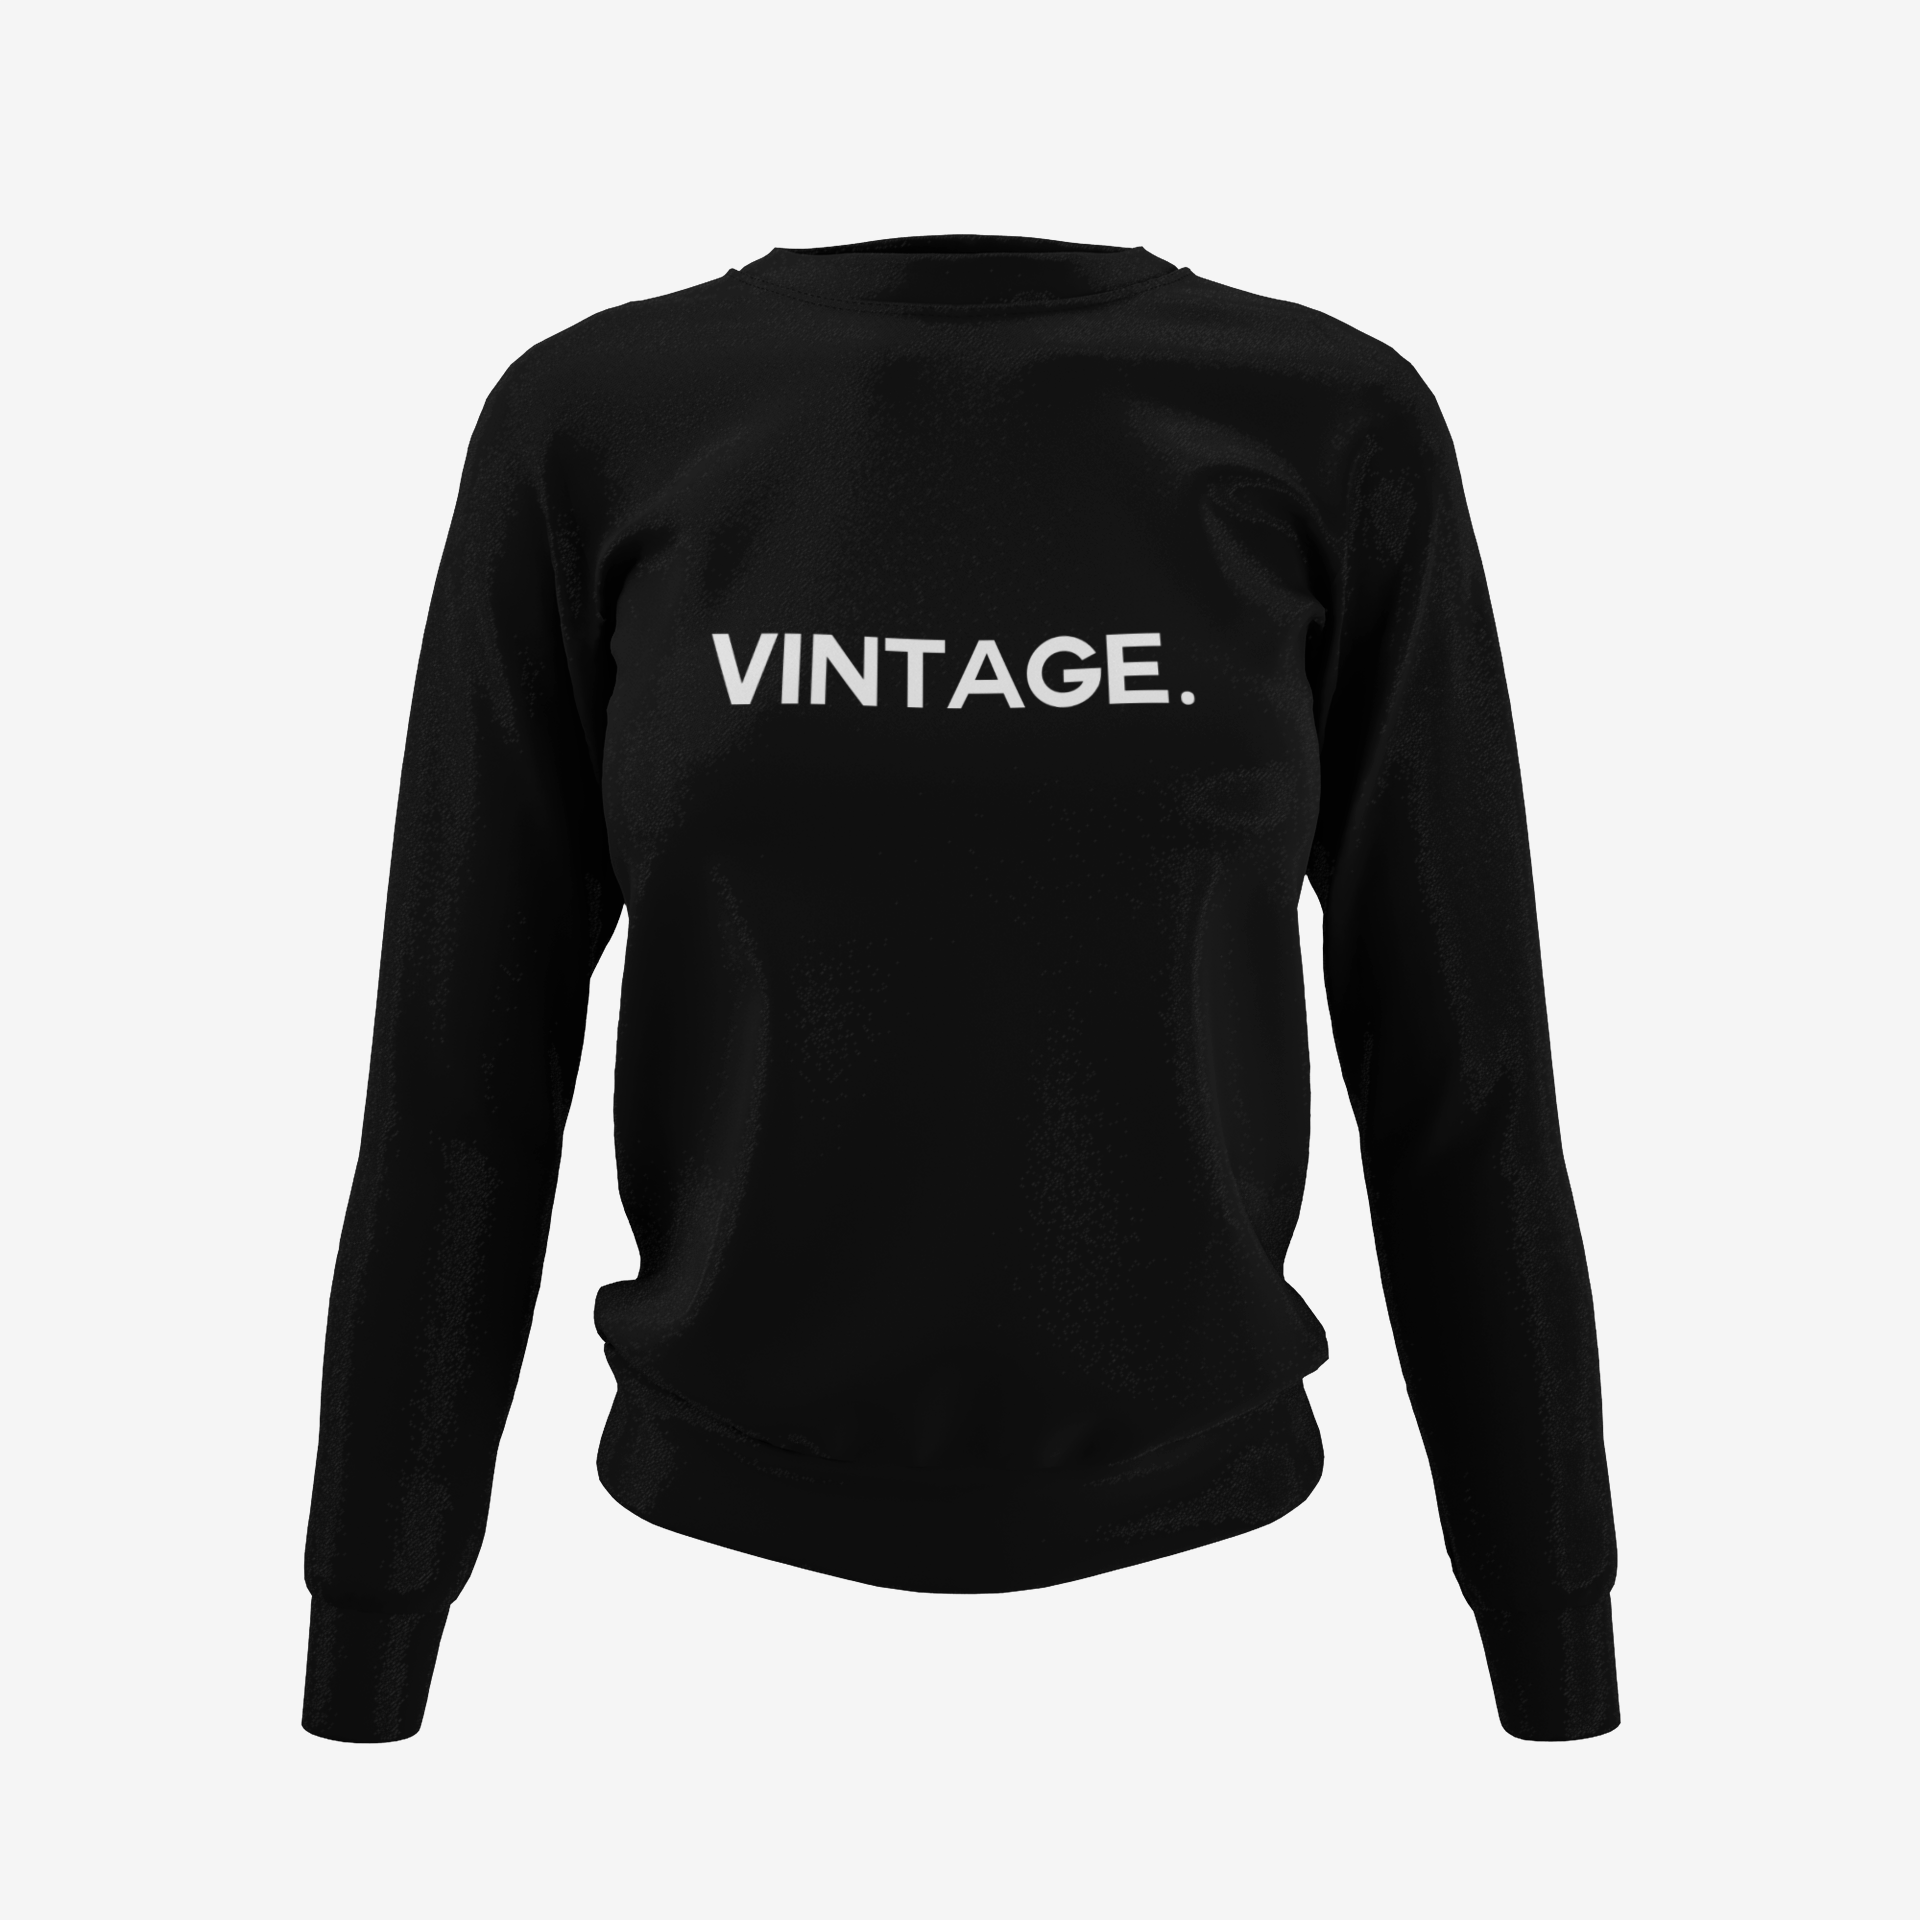 The Vintage. Sweatshirt